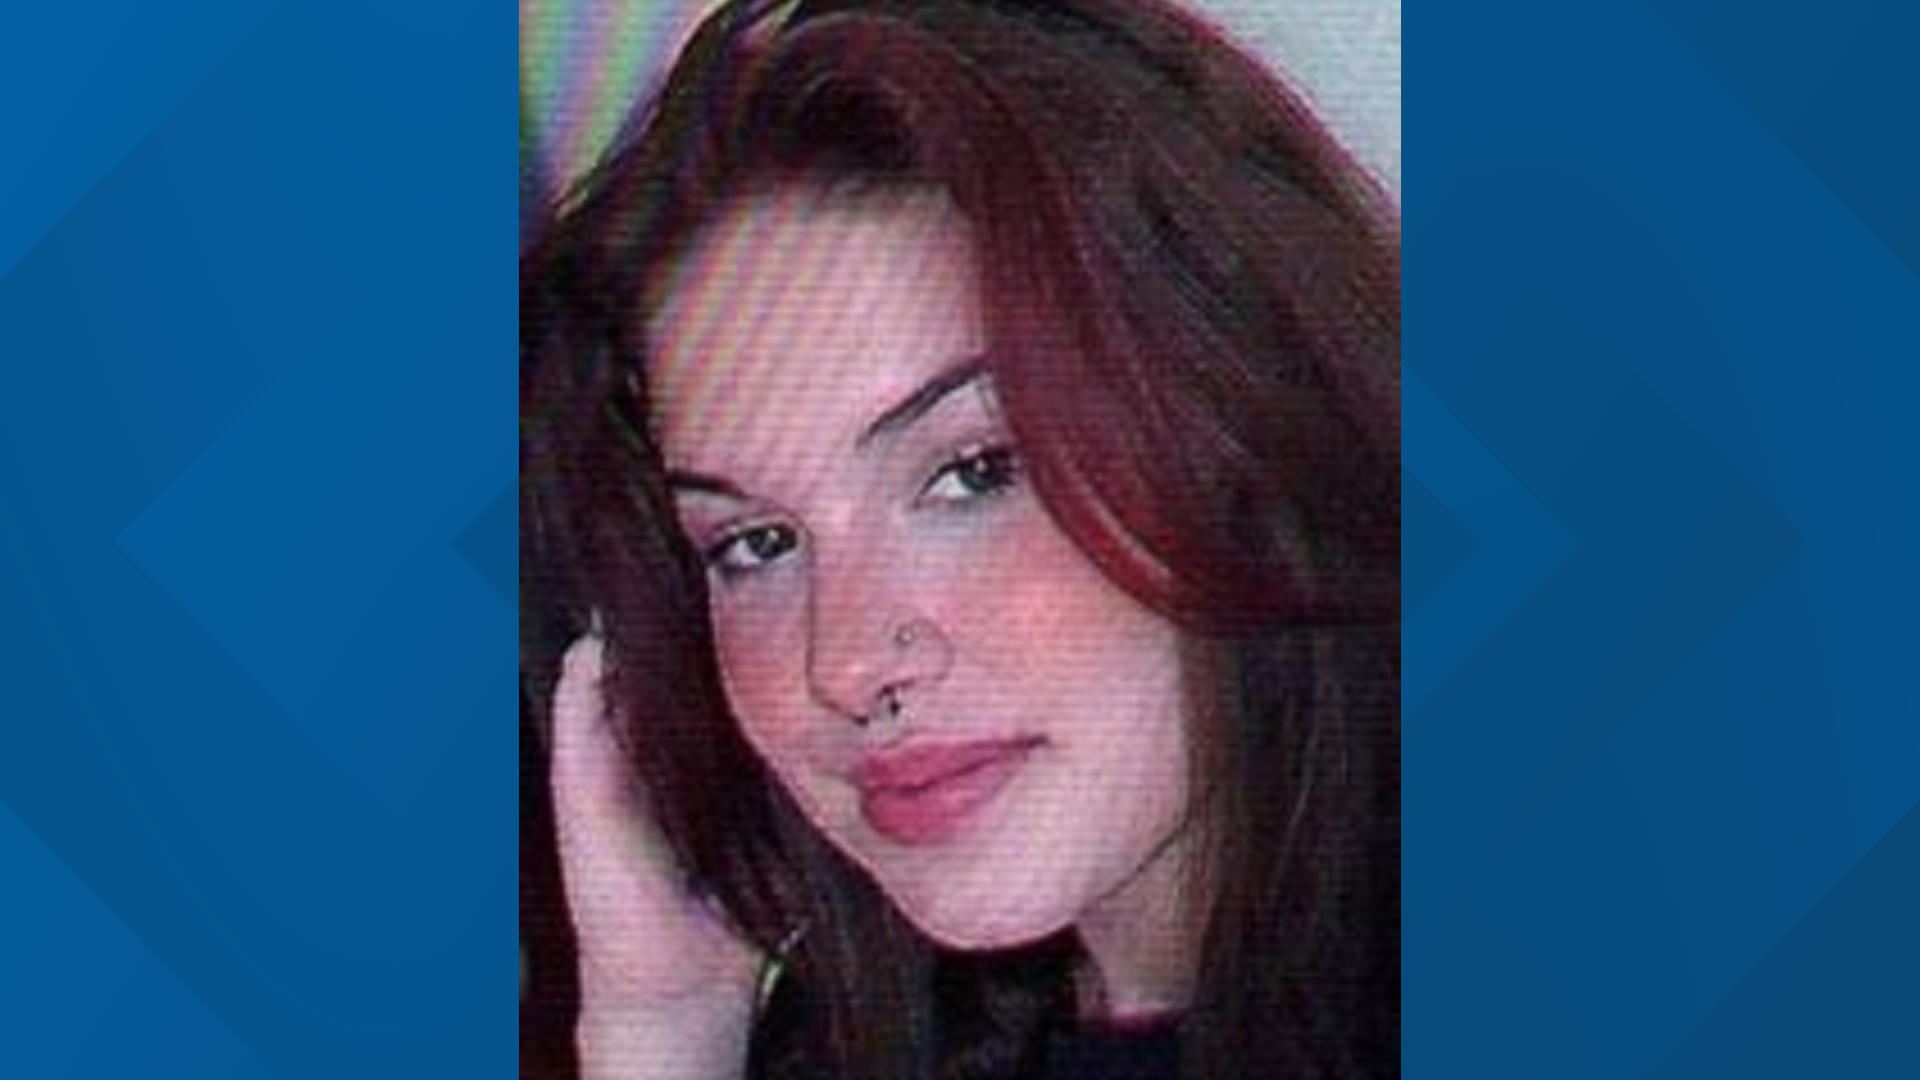 Authorities say Addison Windbigler, 14, has been missing since Dec. 14.